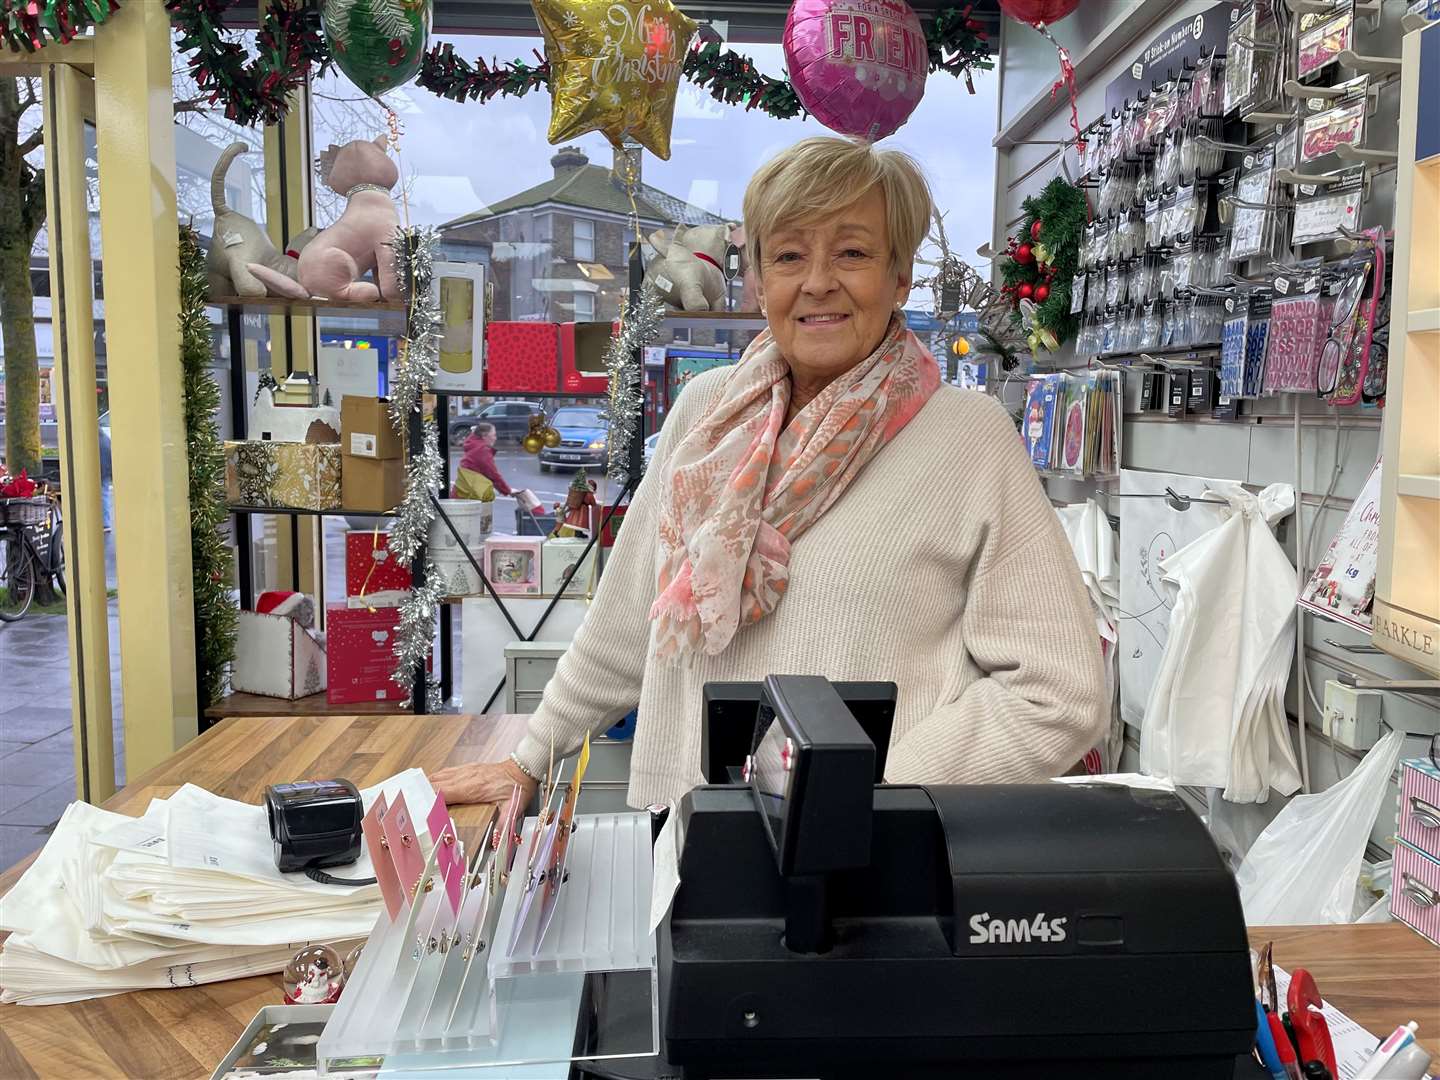 Owner of Gem Cards Diana Scott says sales have fallen